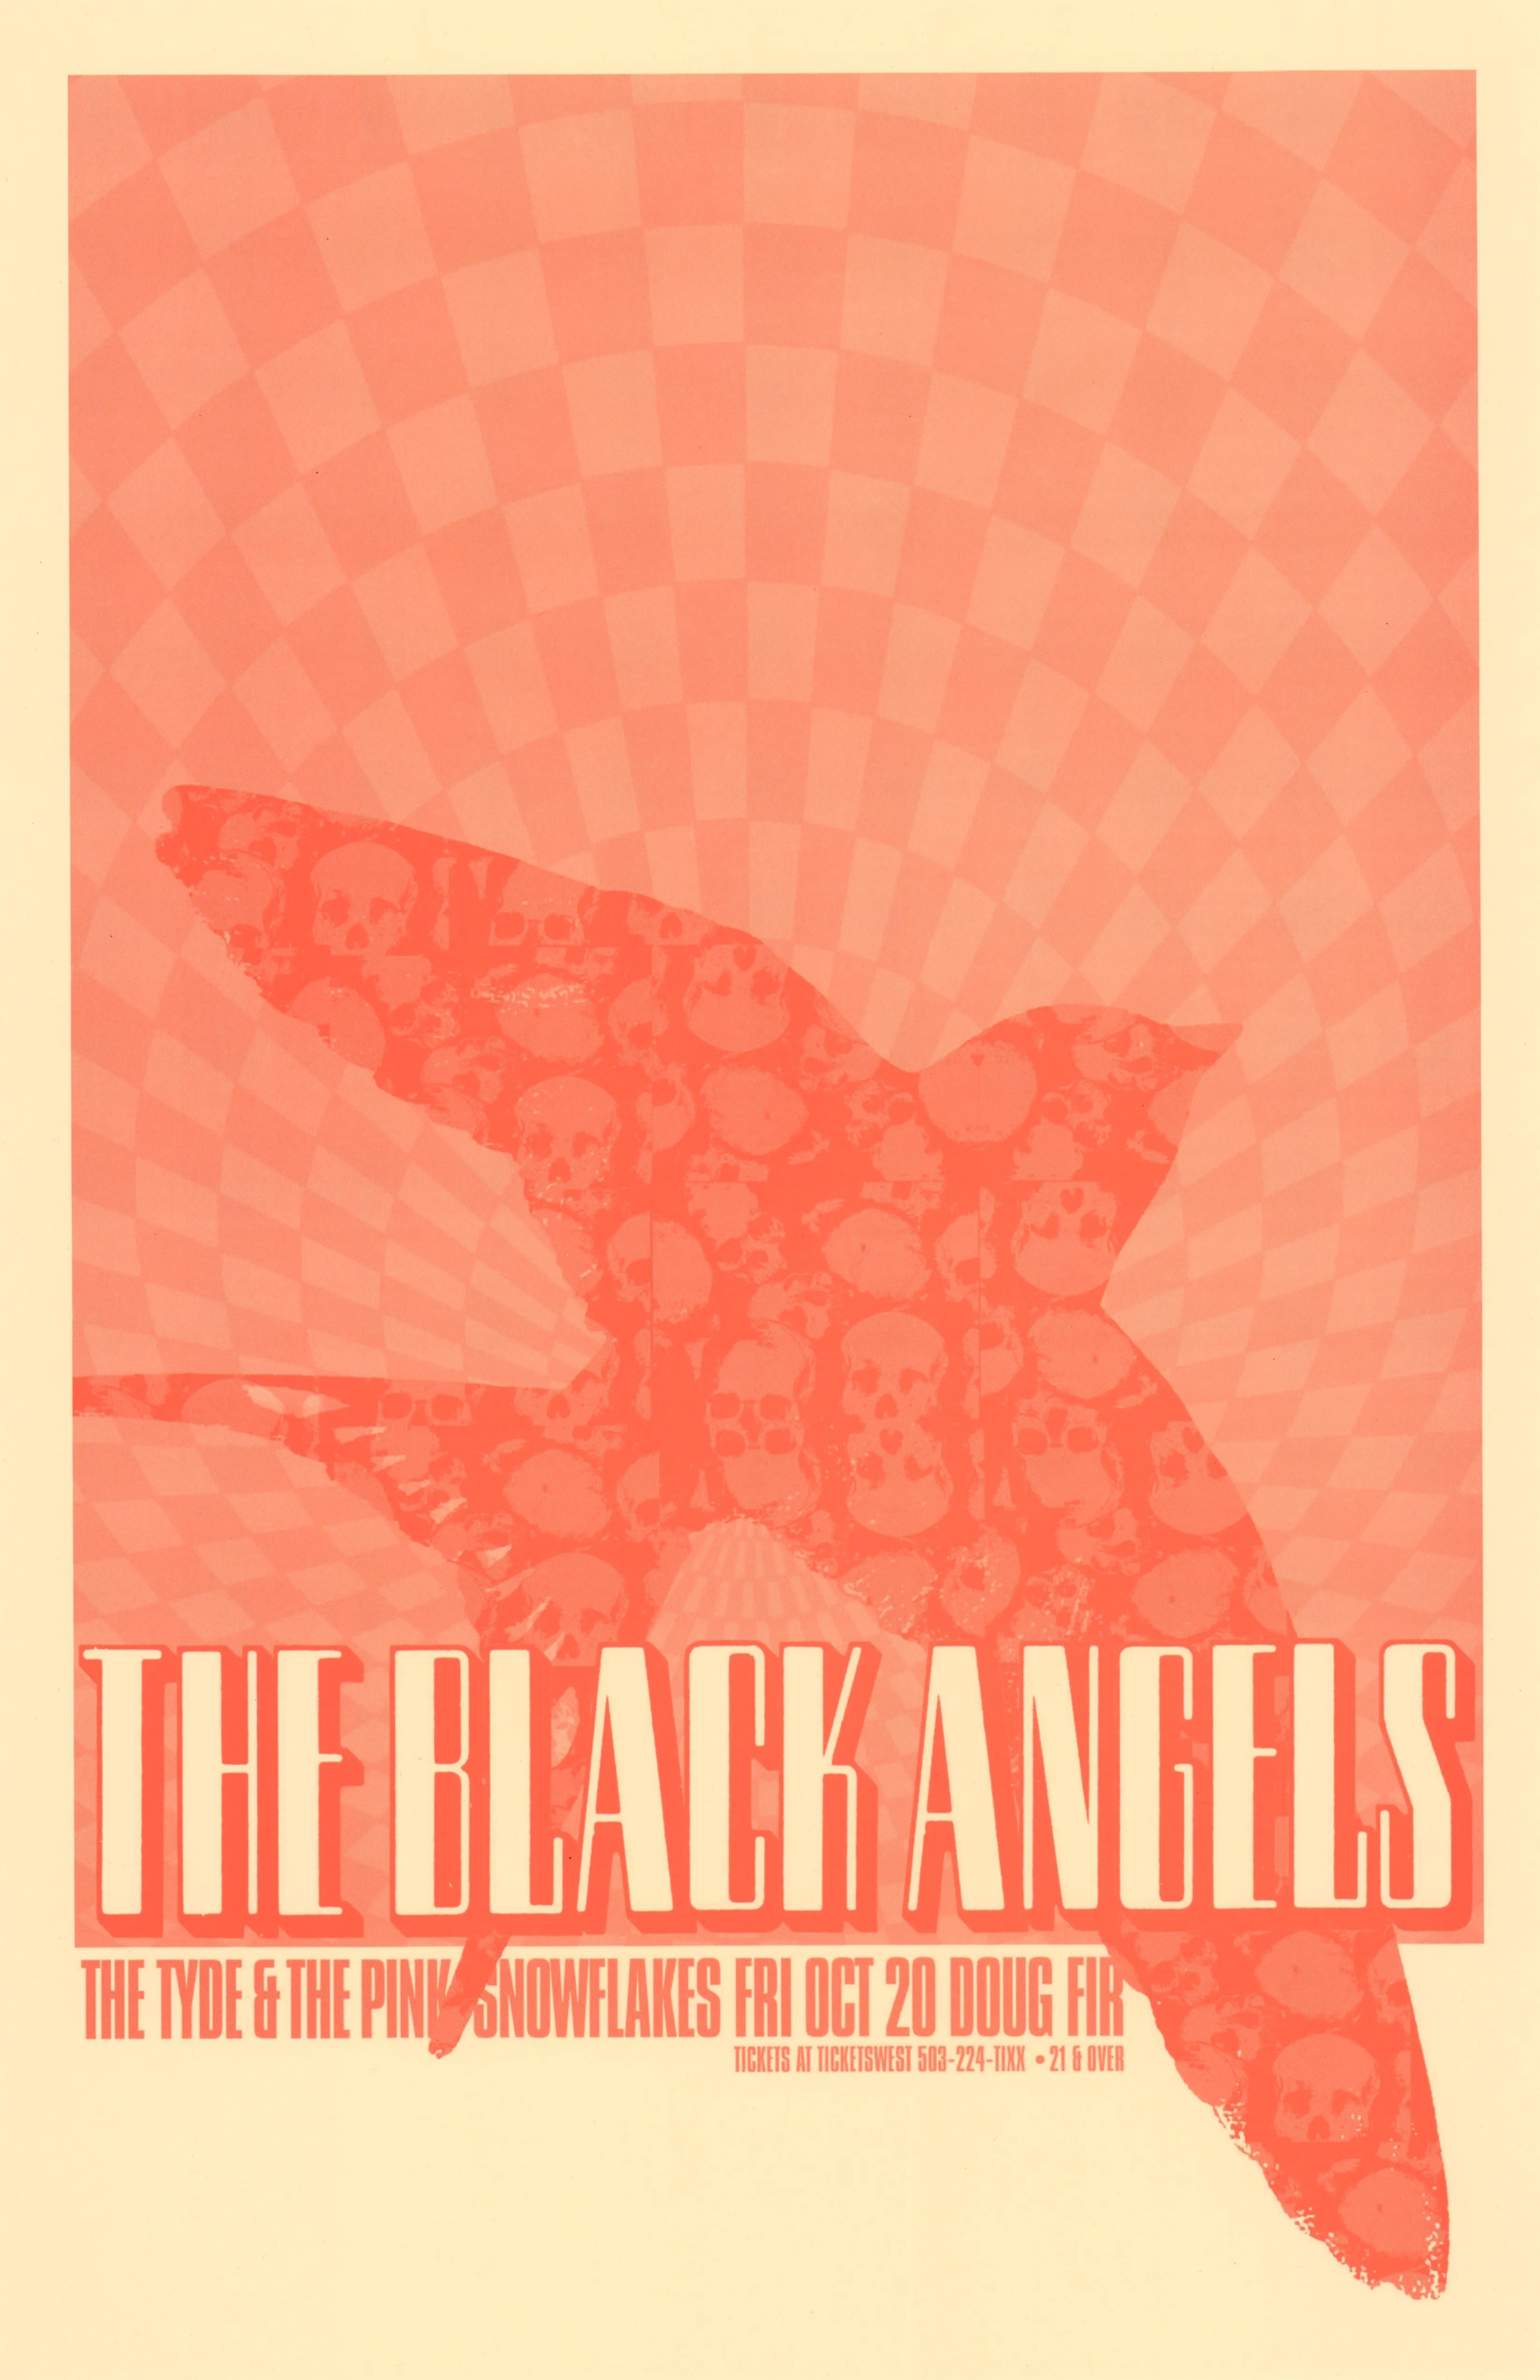 MXP-141.42 Black Angels Doug Fir 2006 Concert Poster